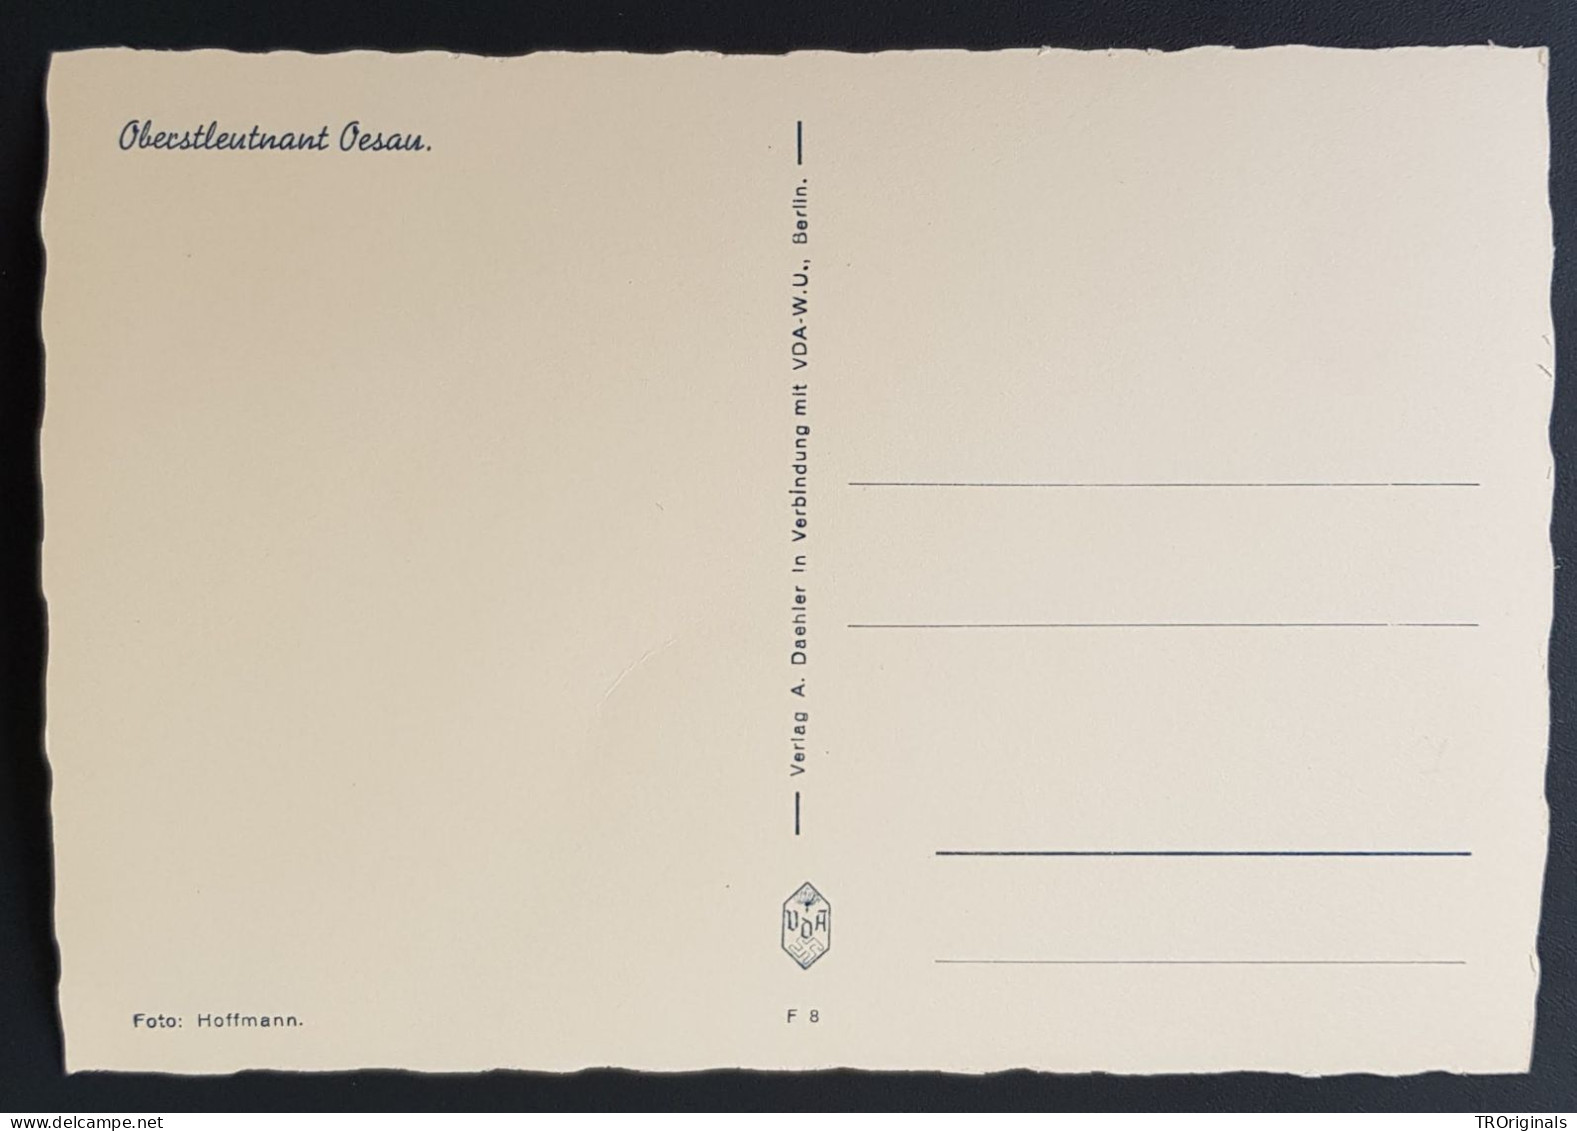 GERMANY THIRD 3rd REICH ORIGINAL WWII CARD IRON CROSS WINNERS - LUFTWAFFE LEUTNANT OESAU - Weltkrieg 1939-45